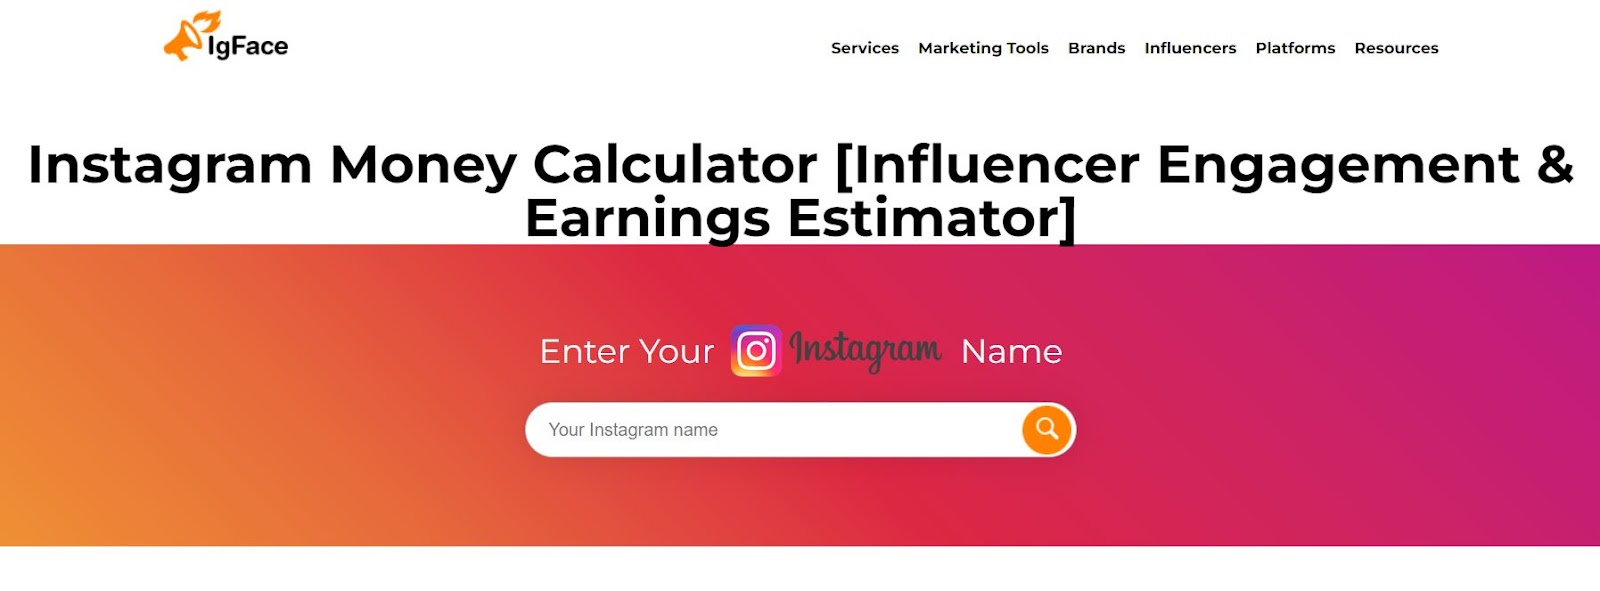 IGFace: Instagram Money Calculator